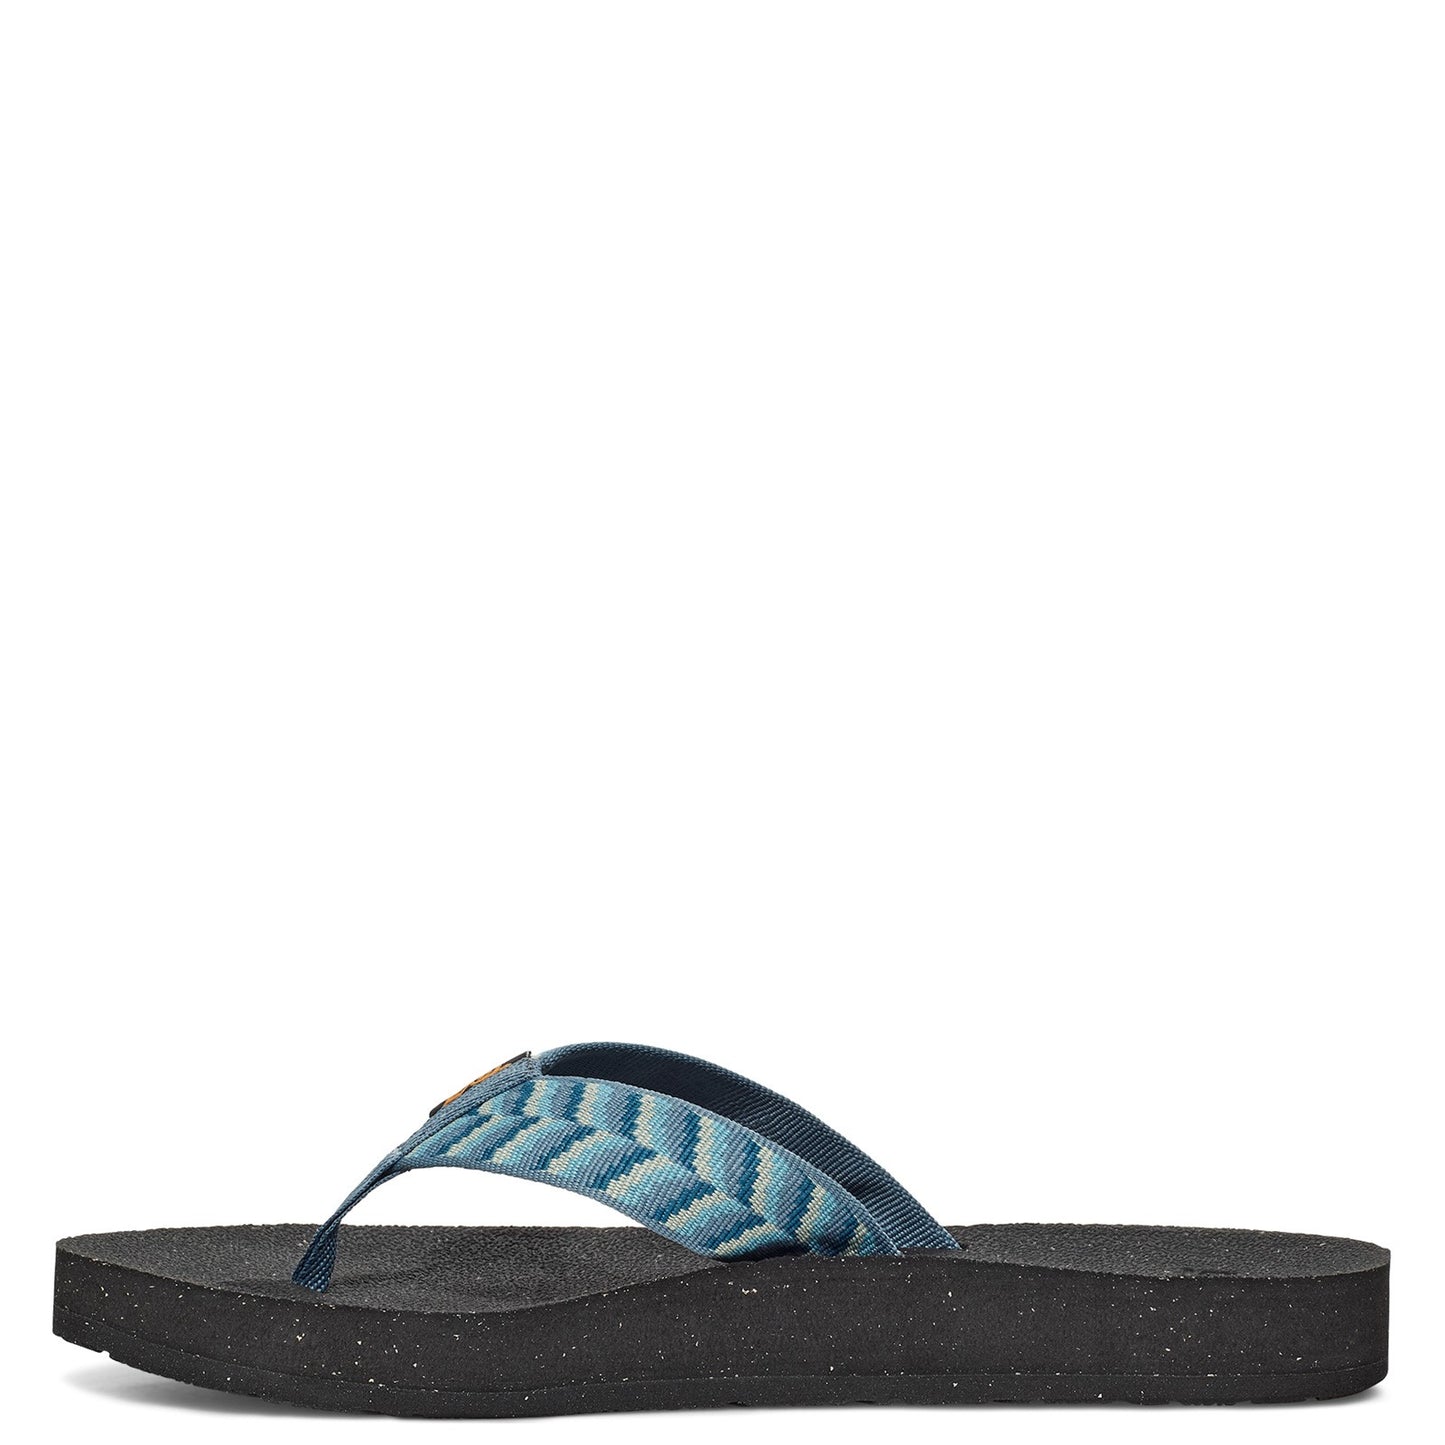 Peltz Shoes  Women's Teva Reflip Sandal RETRO BLUE 1124044-RGCB